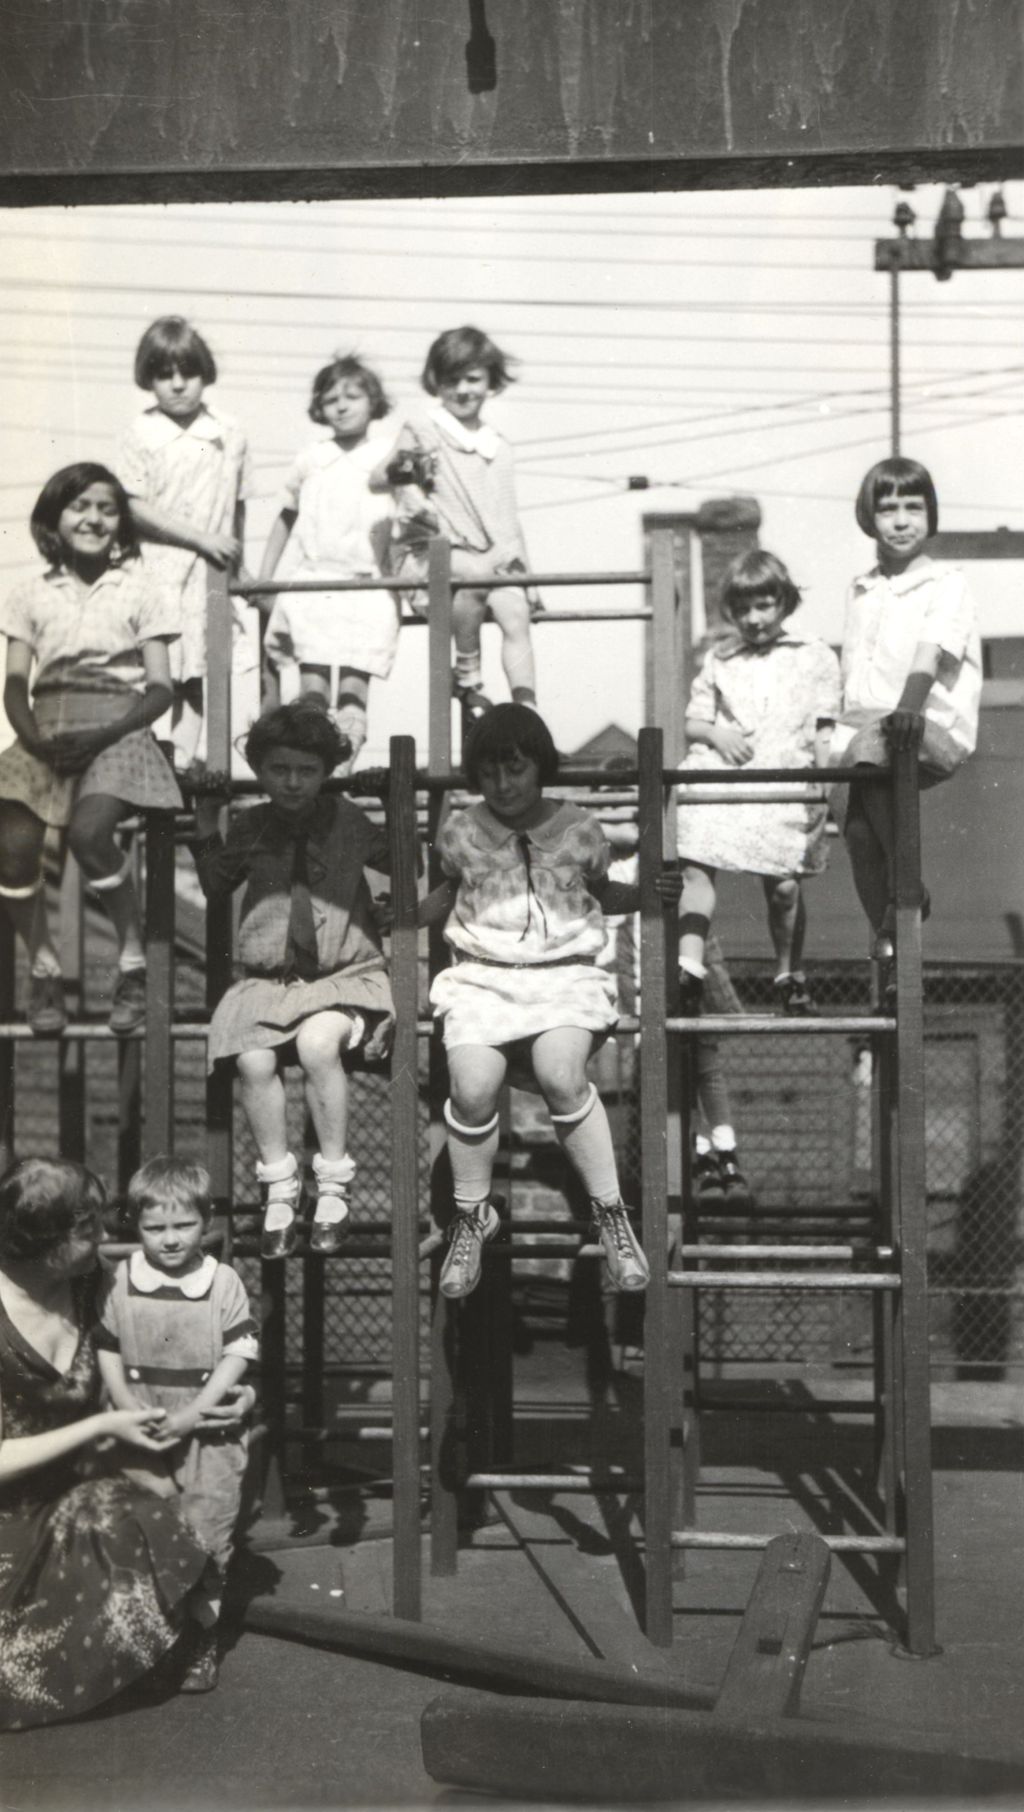 Miniature of Children on playground climbing structure